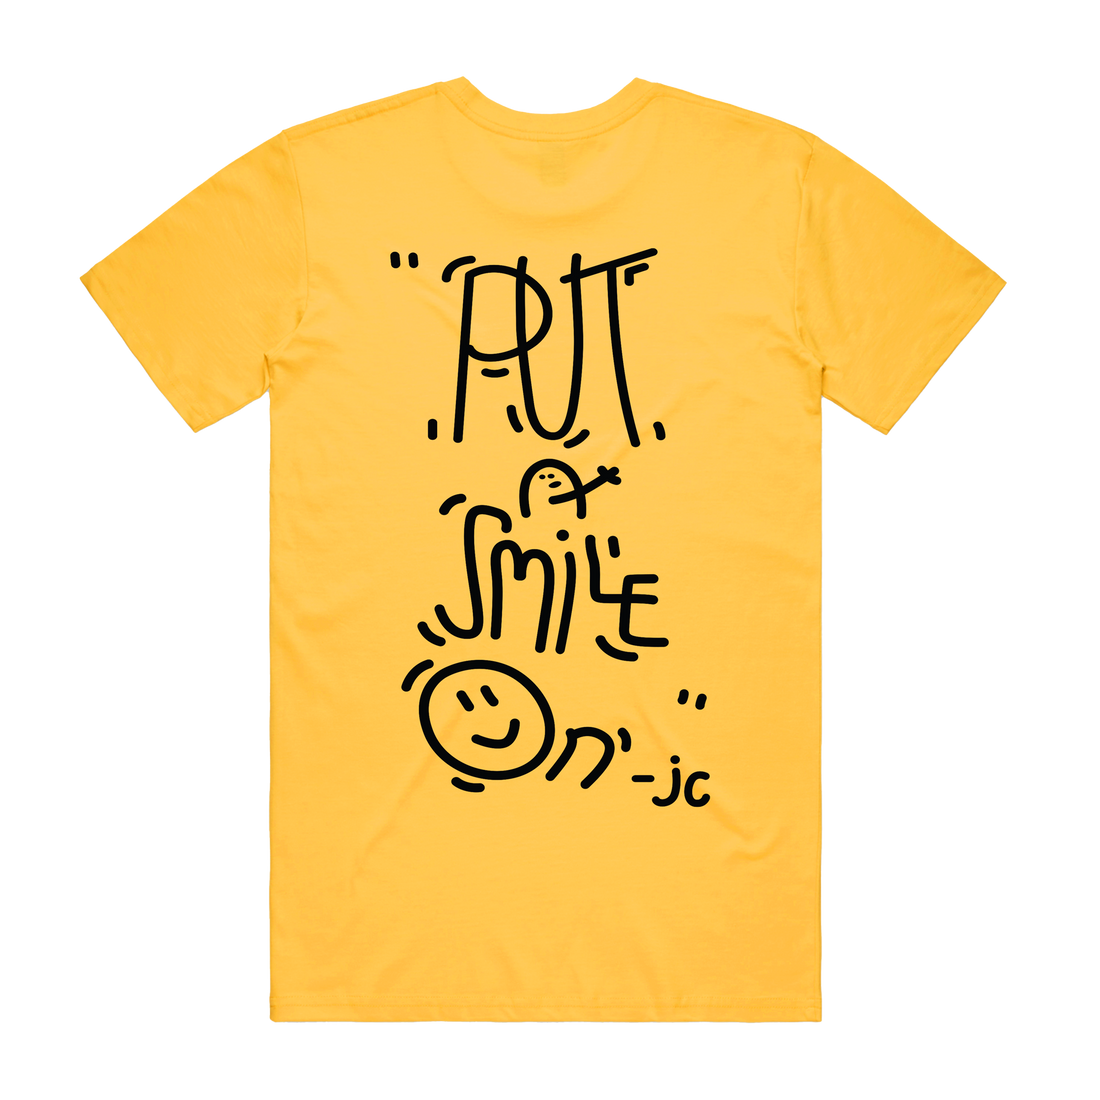 Jon Casey - Put On A Smile - Yellow Tee